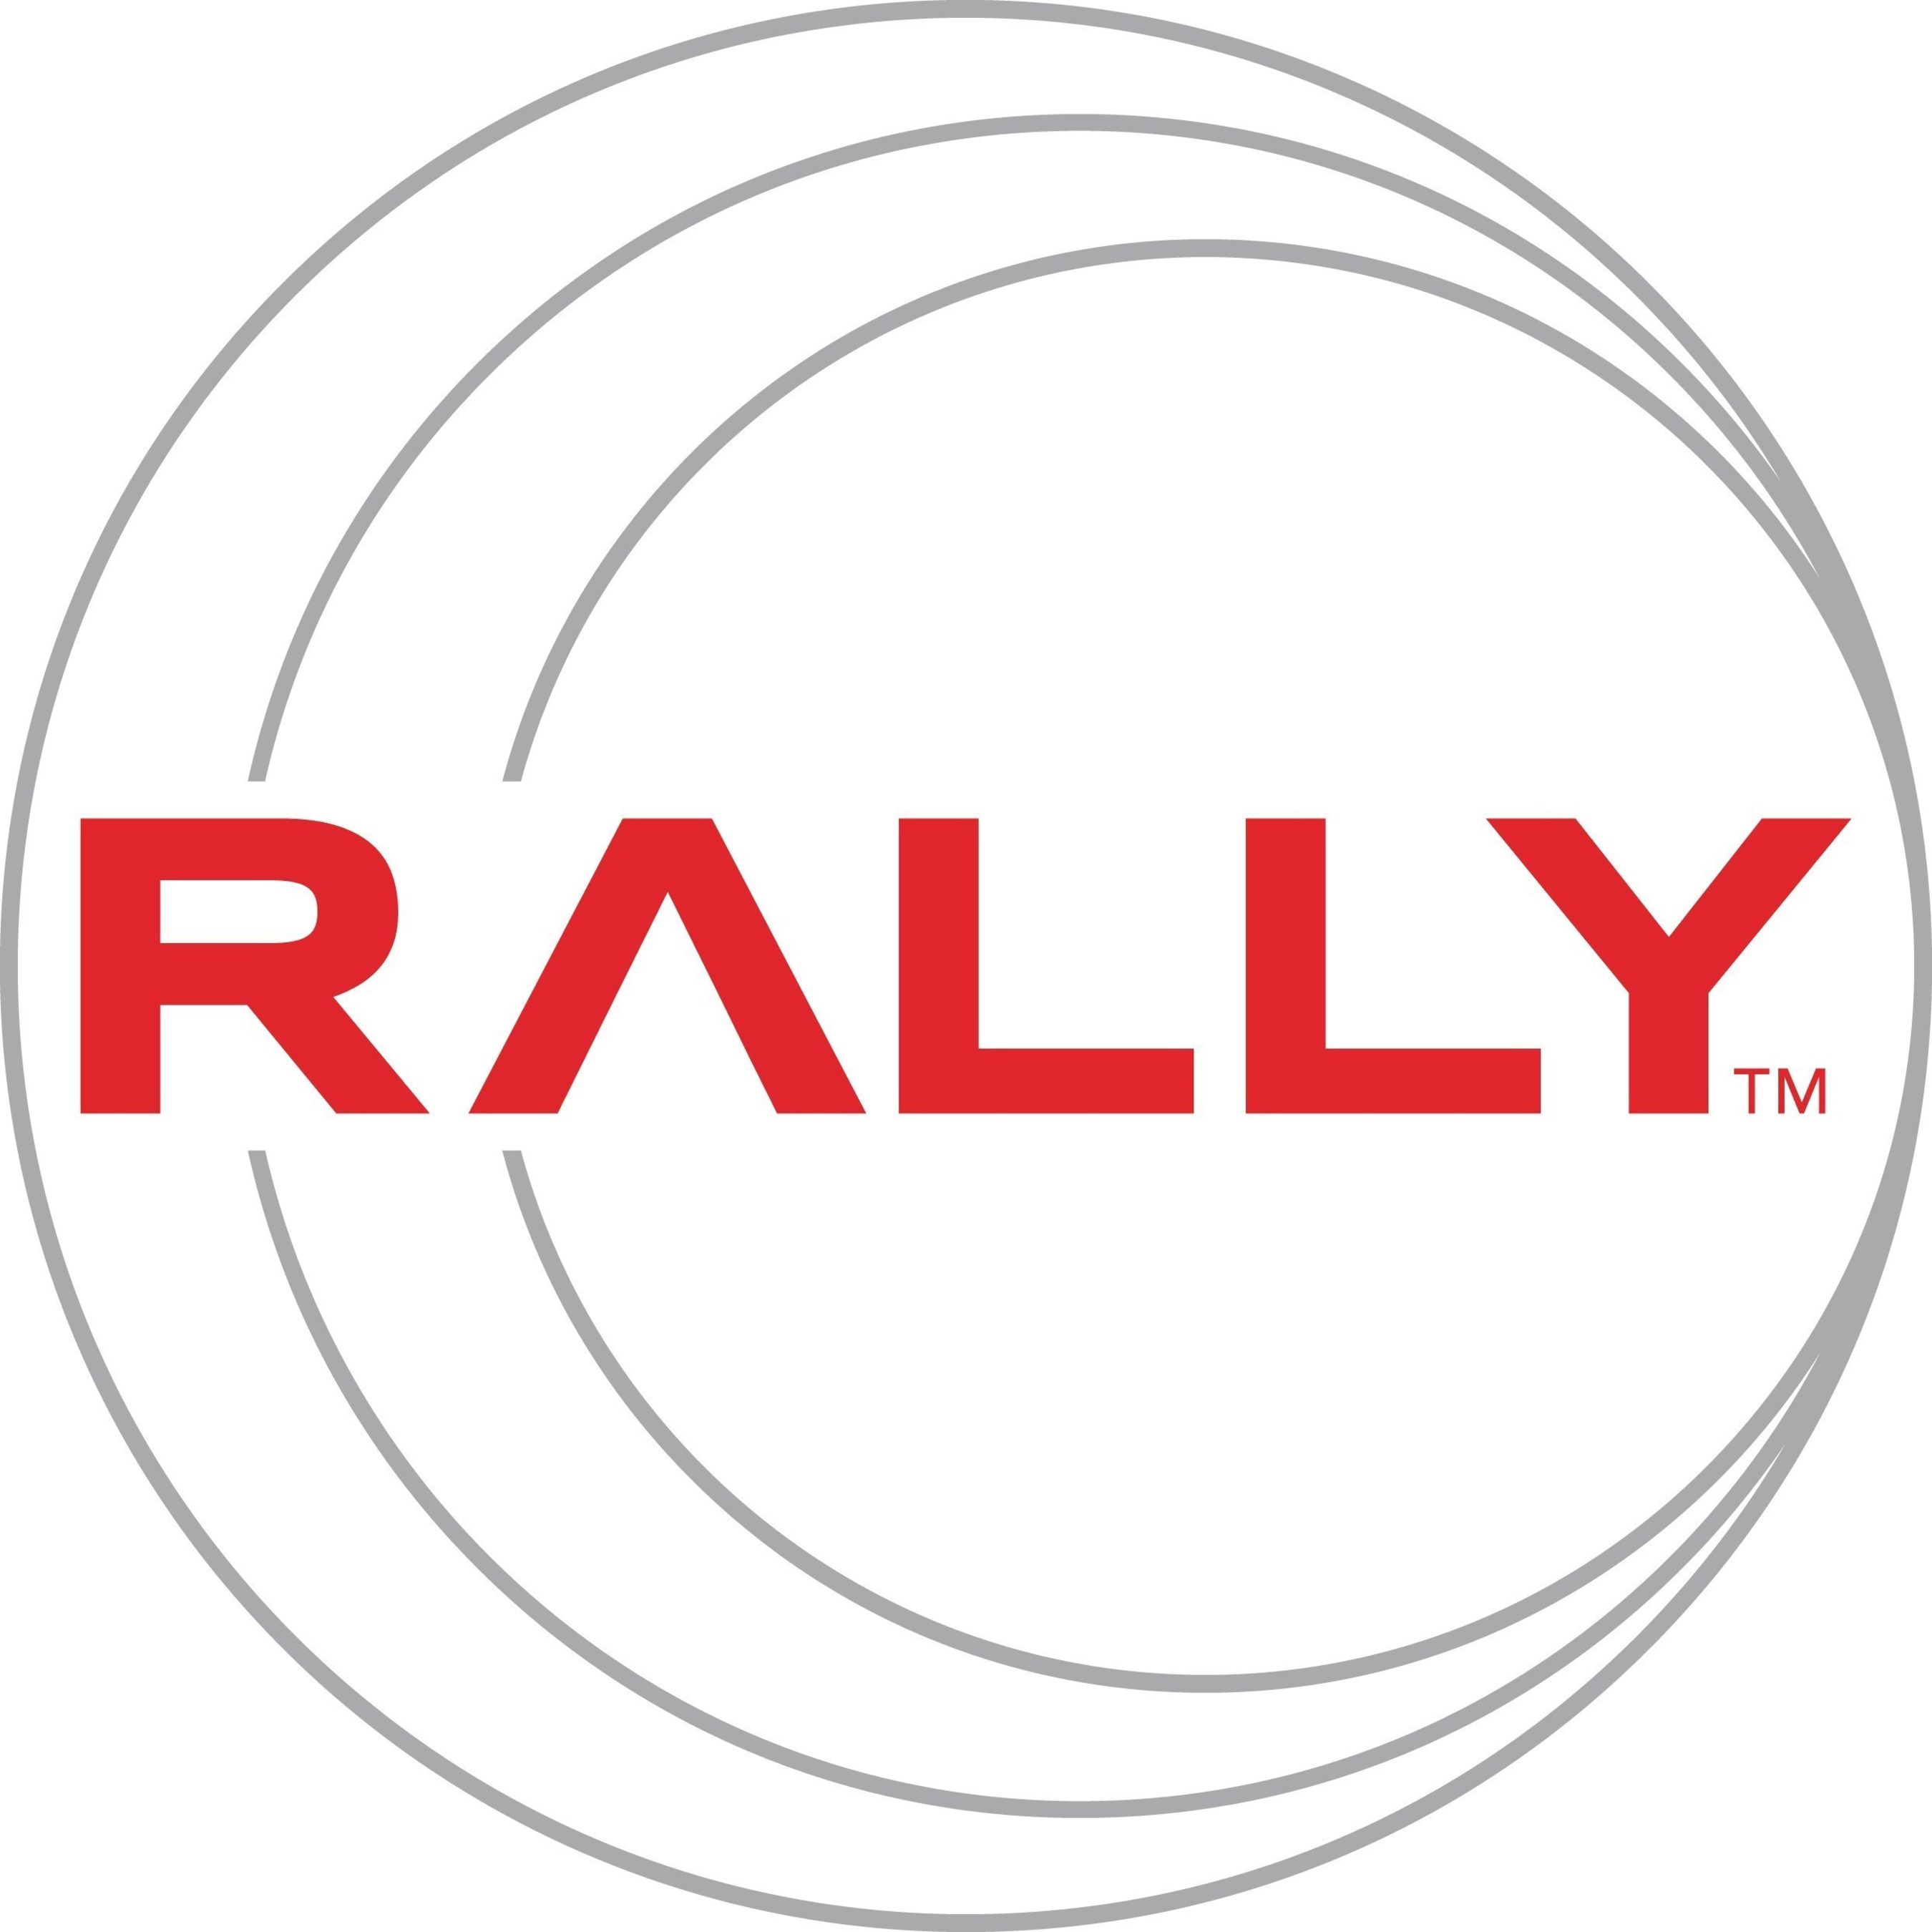 Rally unveils new brand identity.